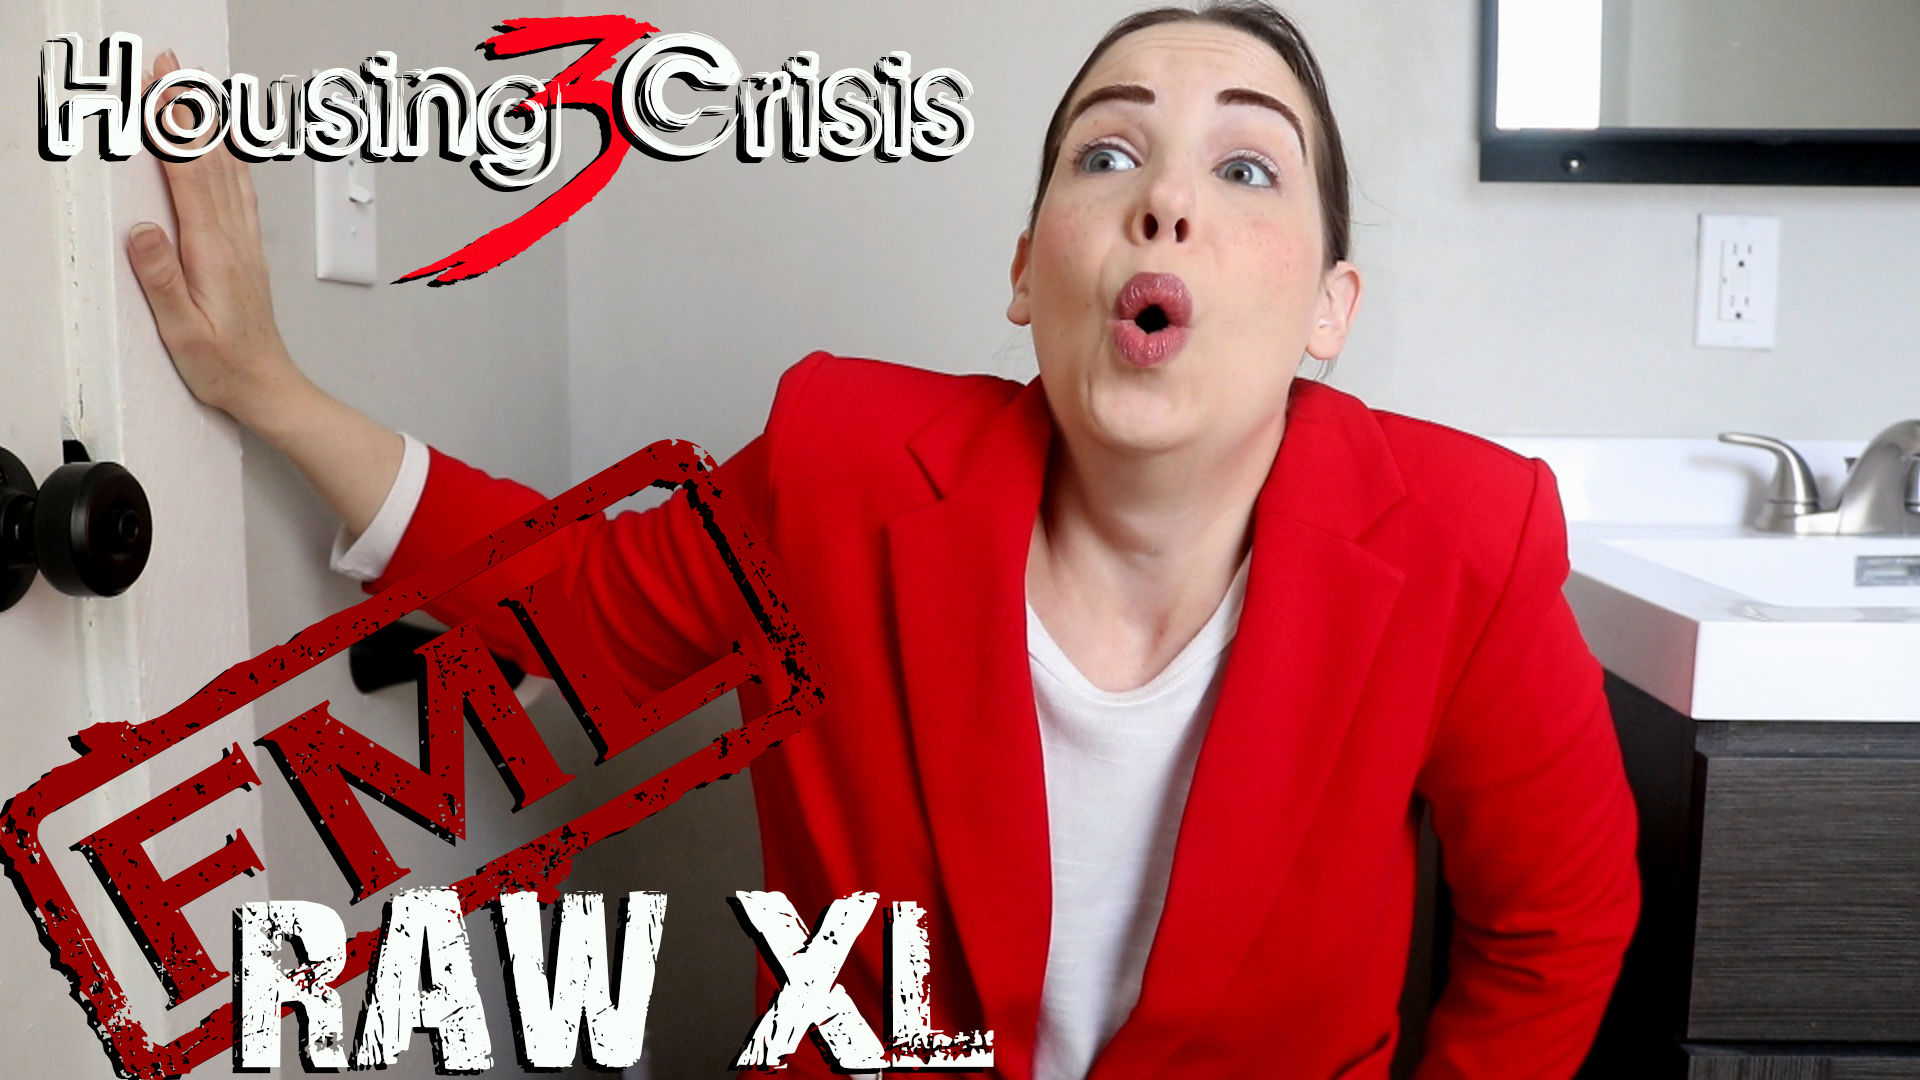 RAW XL: Housing Crisis 3